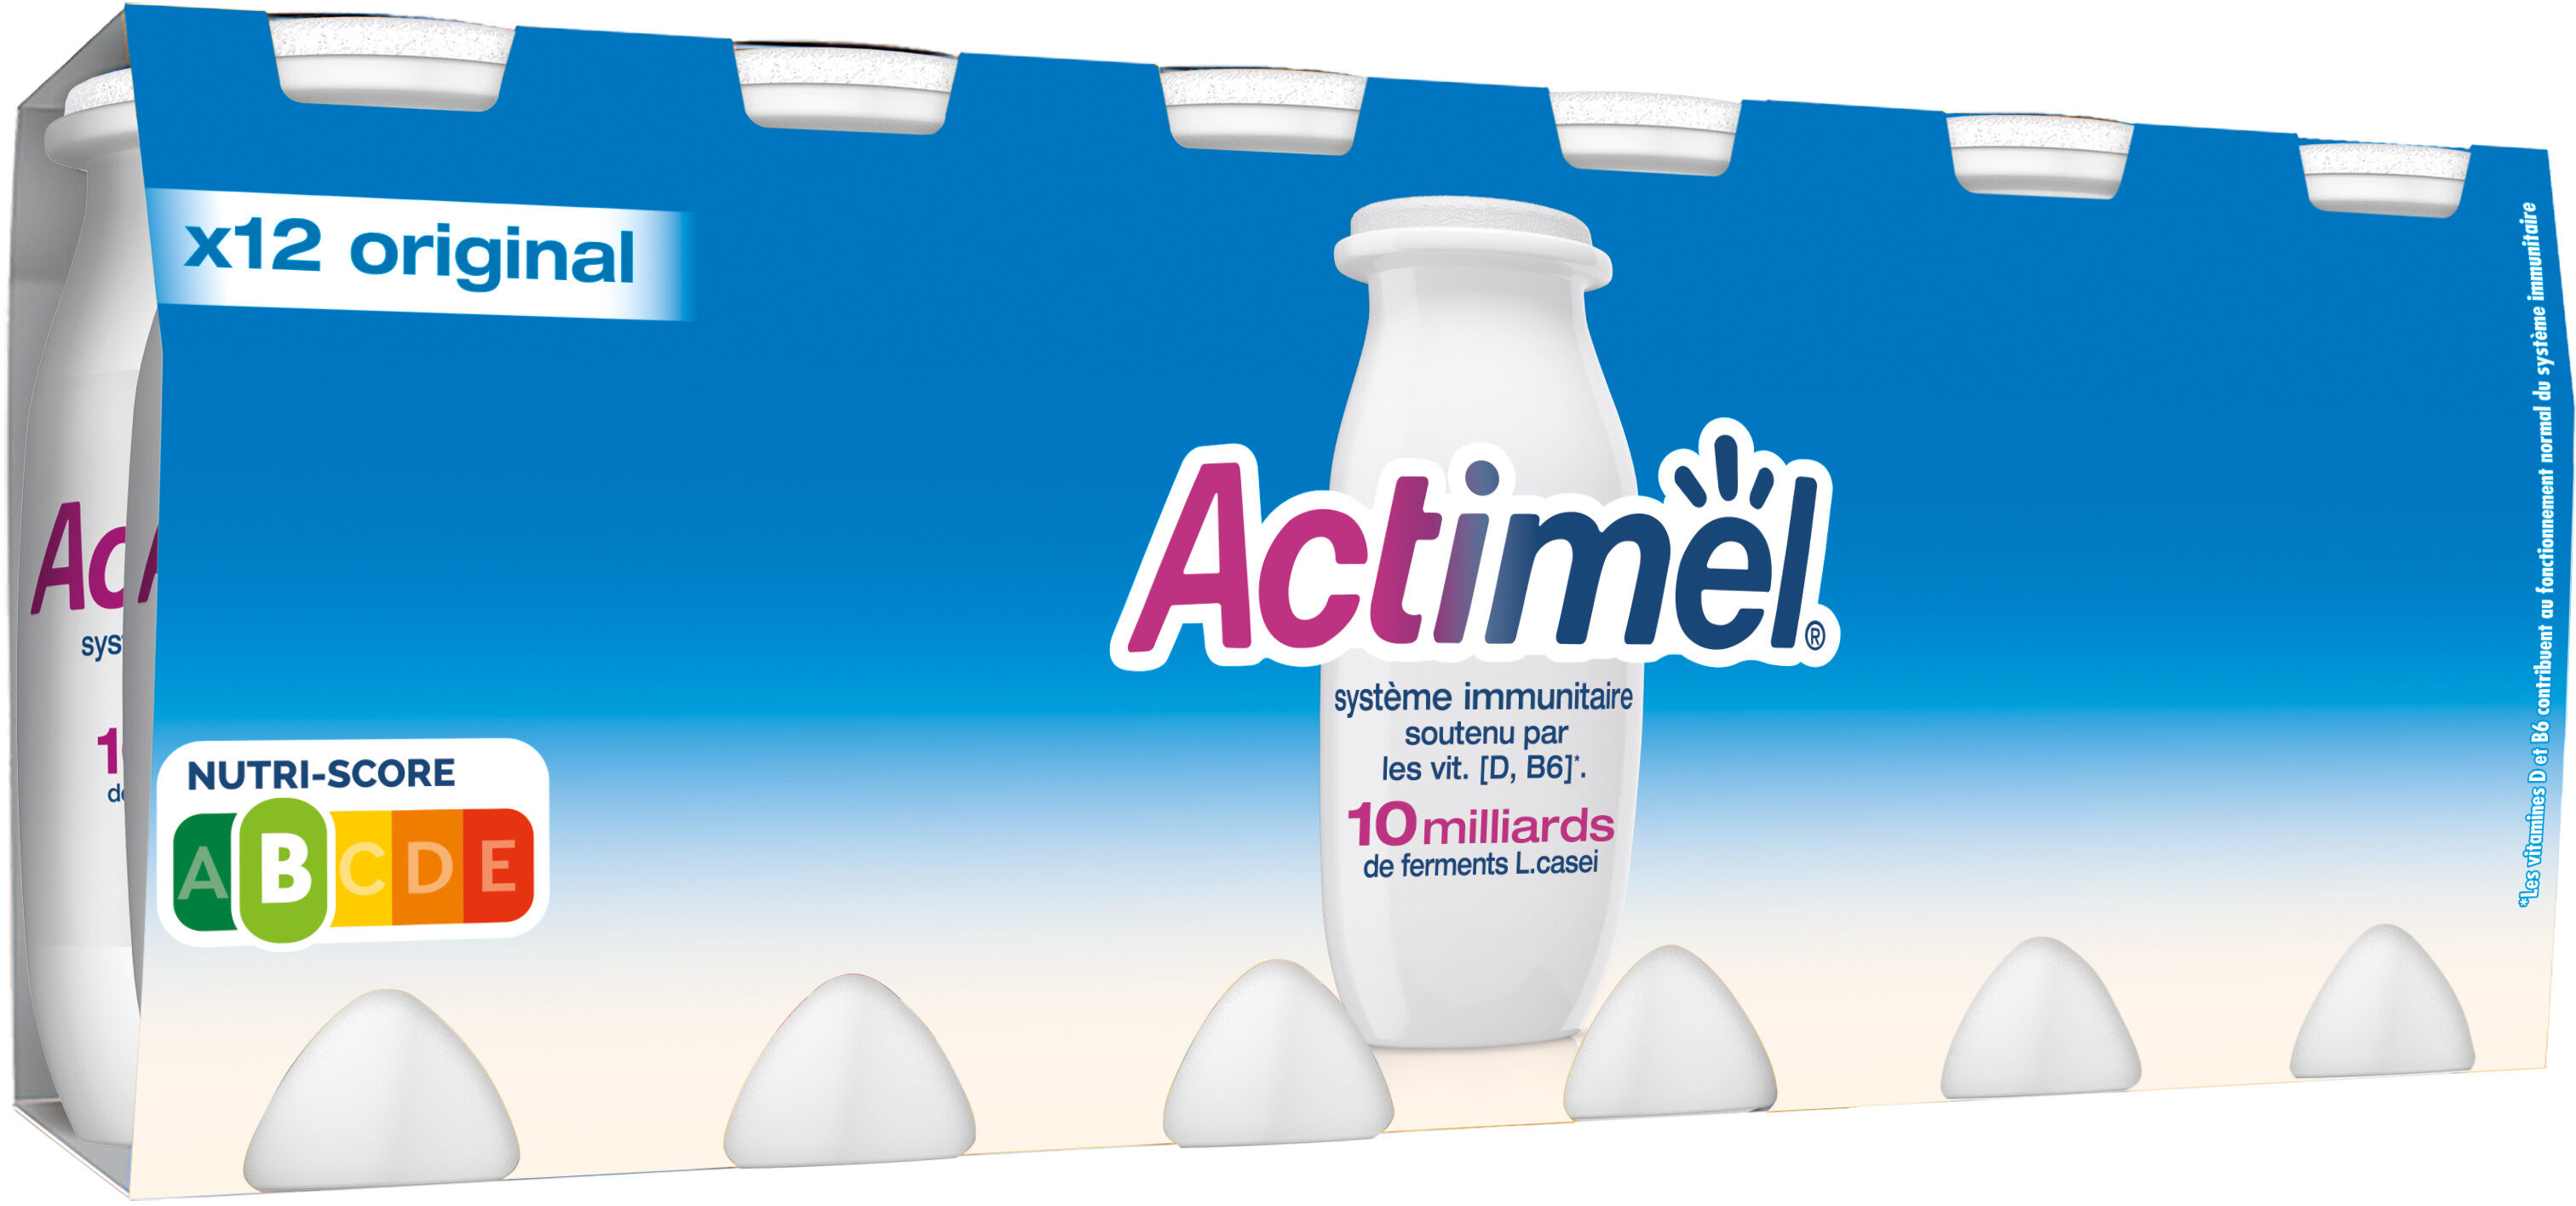 Actimel 100 g x 12 original - Product - fr